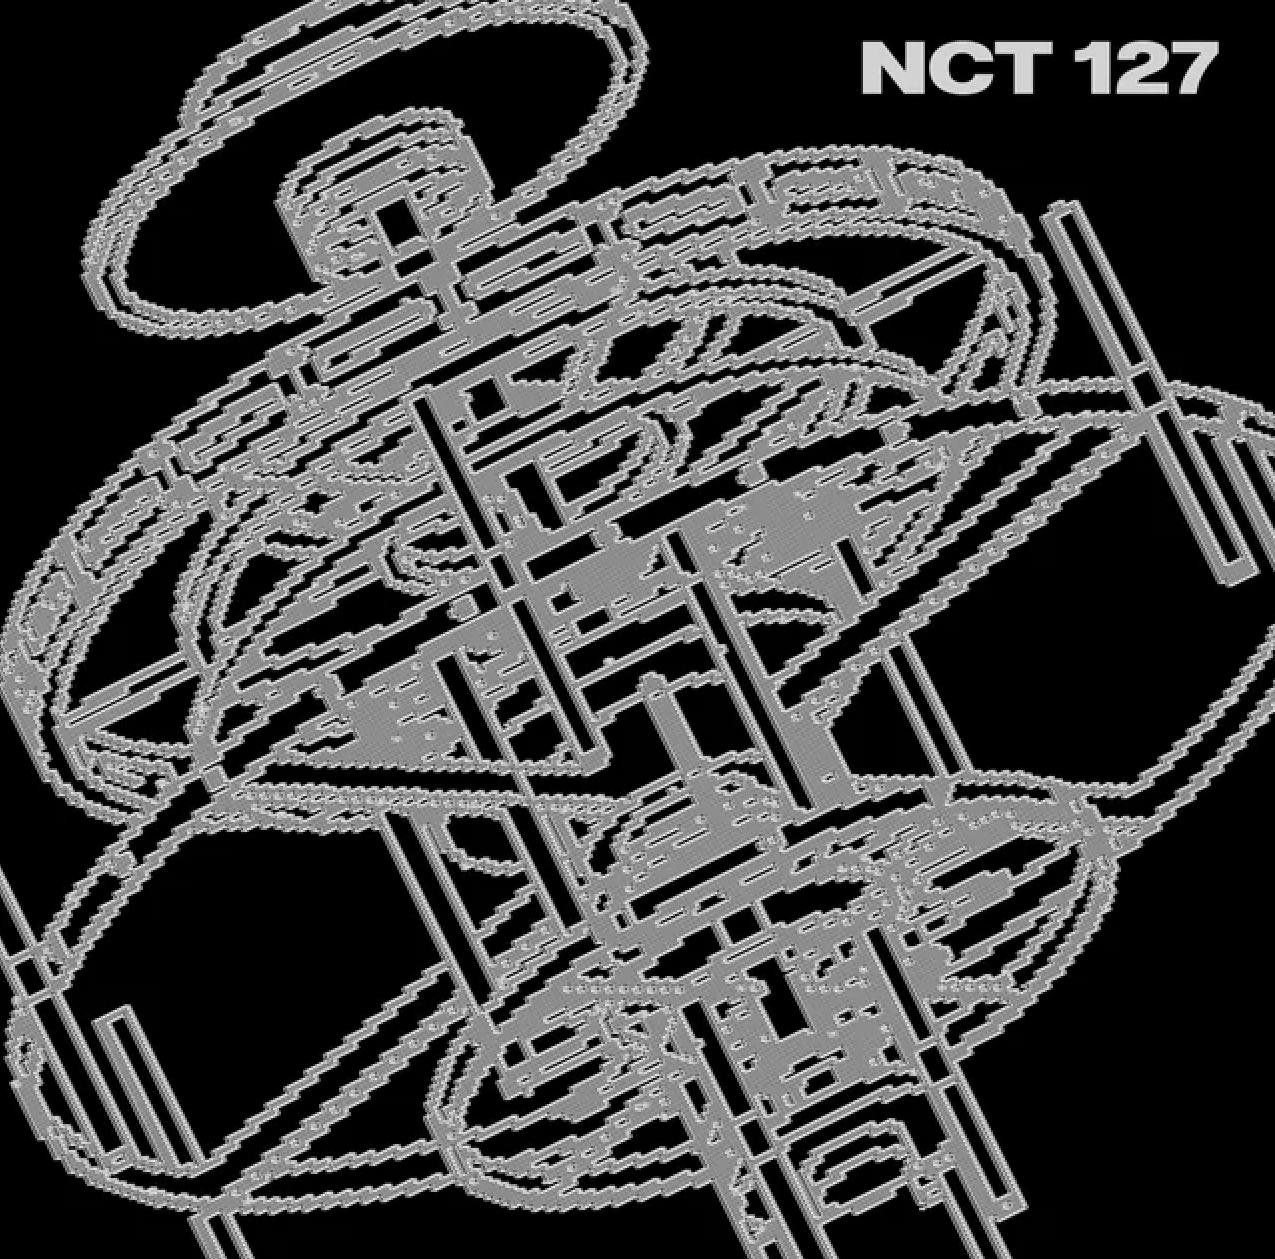 NCT 127 — Fact Check cover artwork